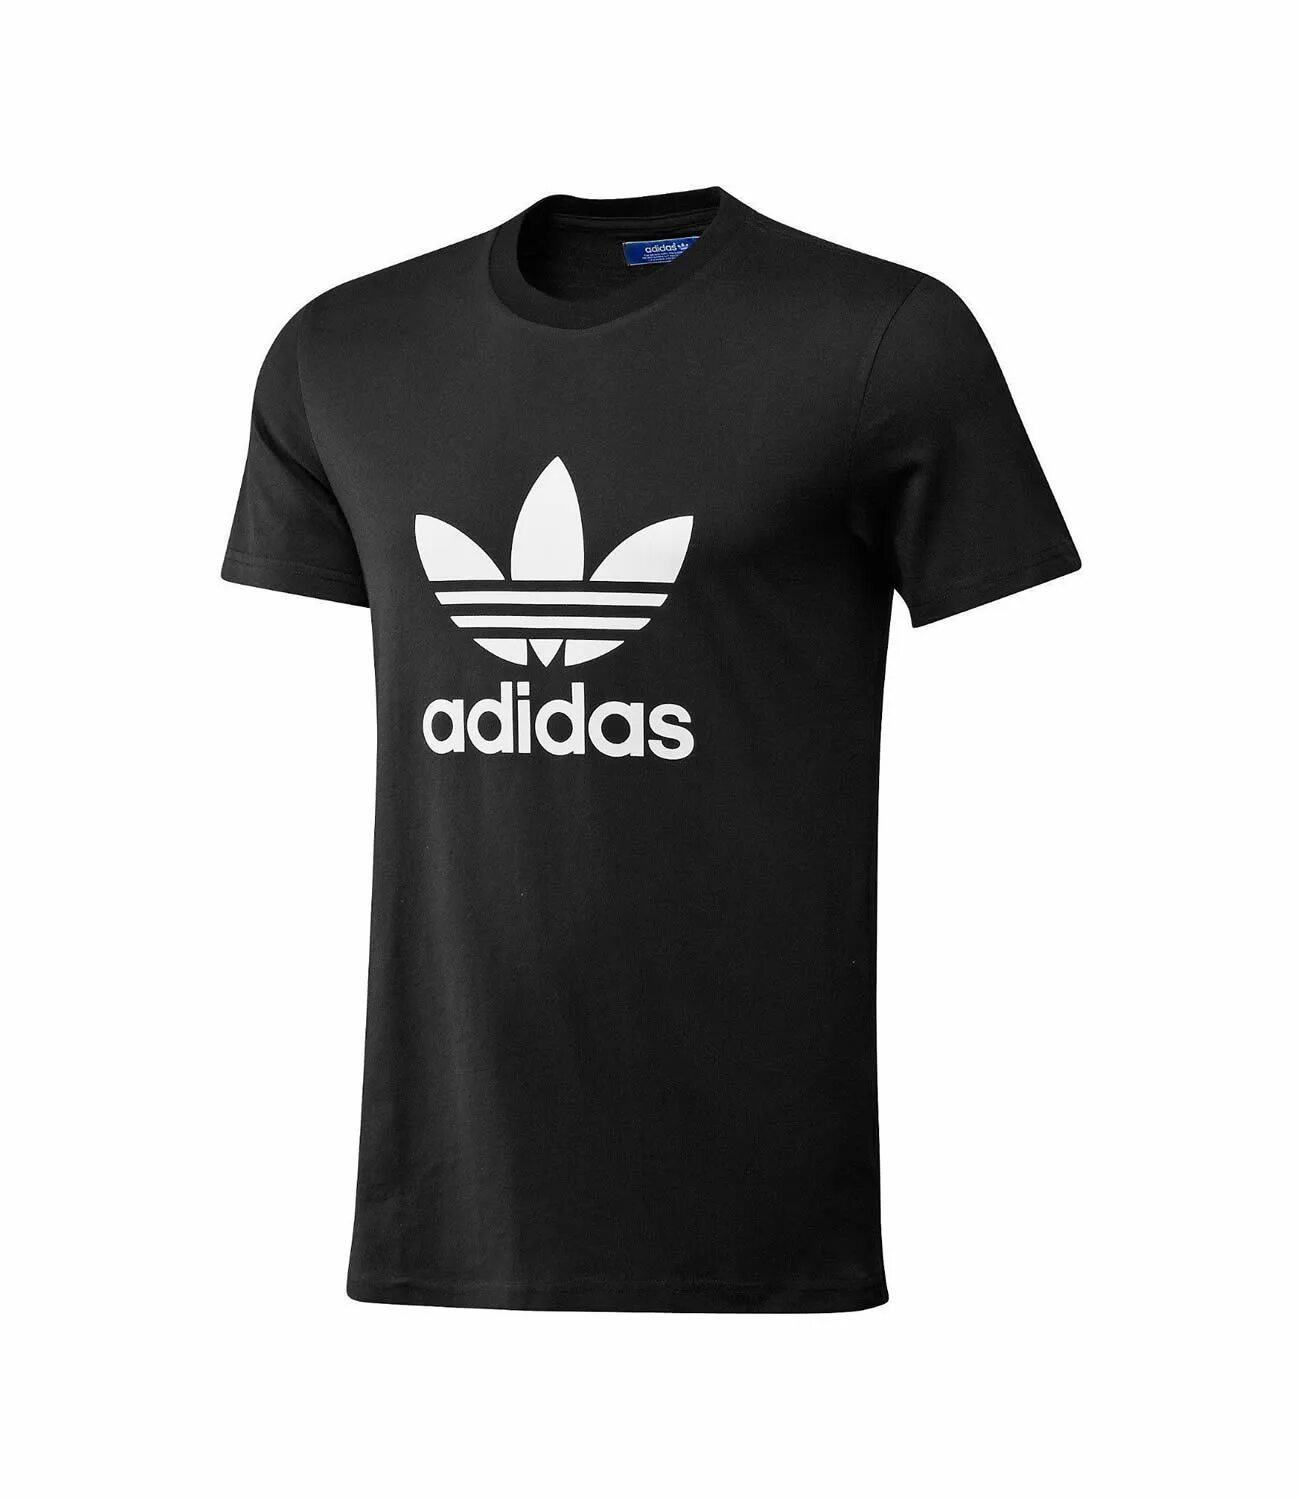 Adidas Printshop. T-Shirt adidas Black. Адидас т ширт. Adidas t Shirt New collection.